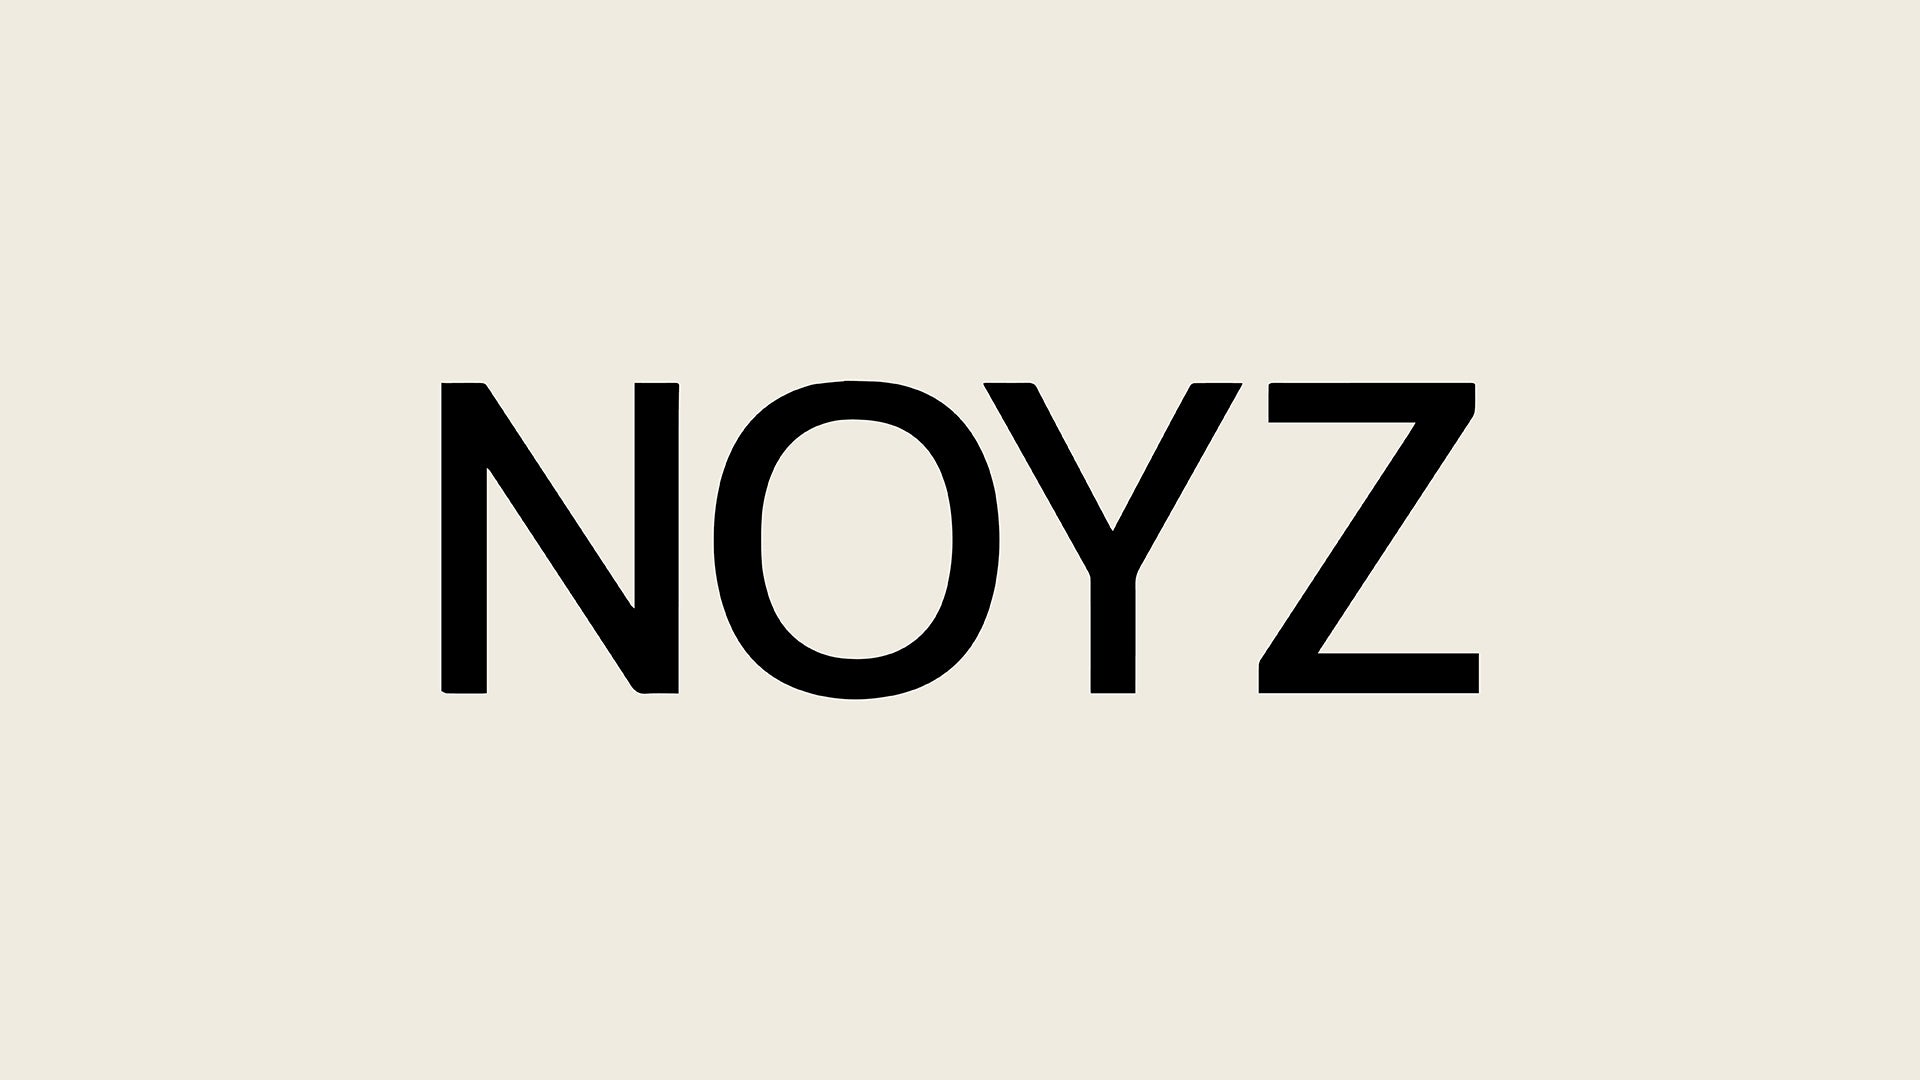 Animated glitch logo of top unisex fragrance brand NOYZ